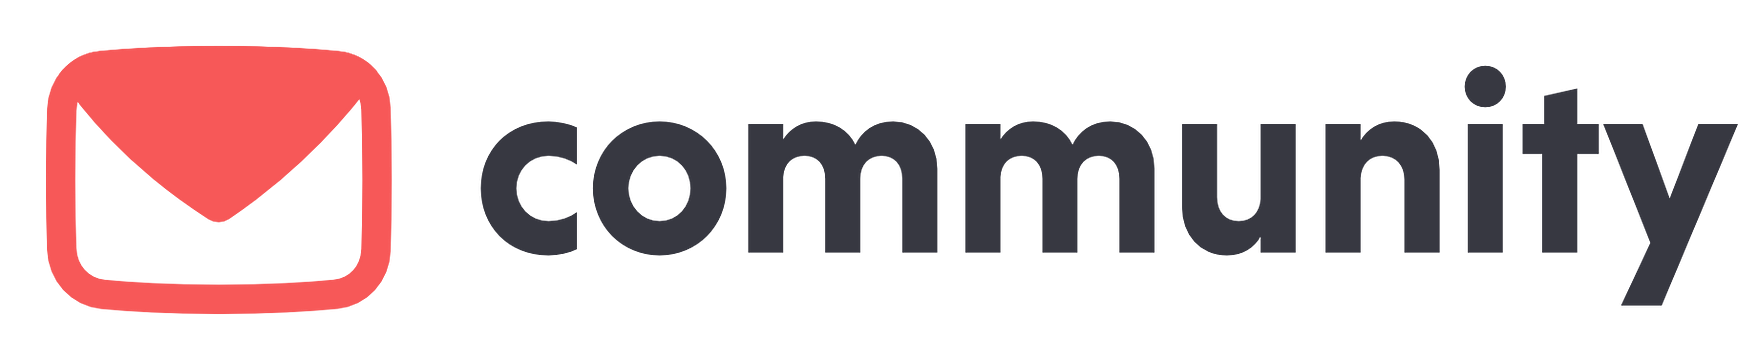 Mailbrew Community logo